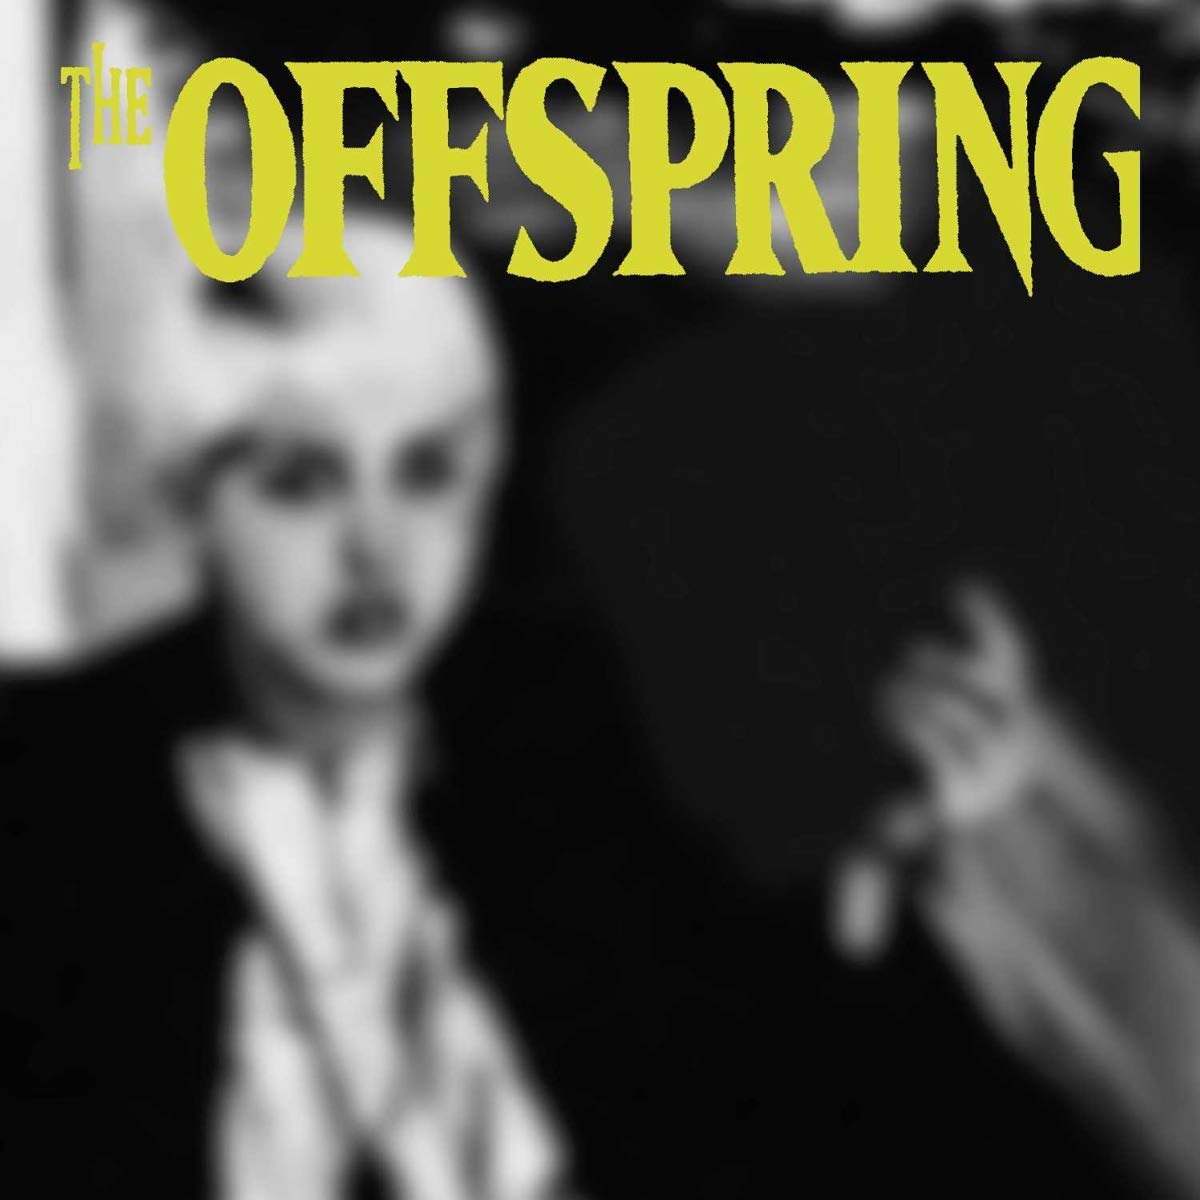 OFFSPRING - THE OFFSPRING Vinyl LP